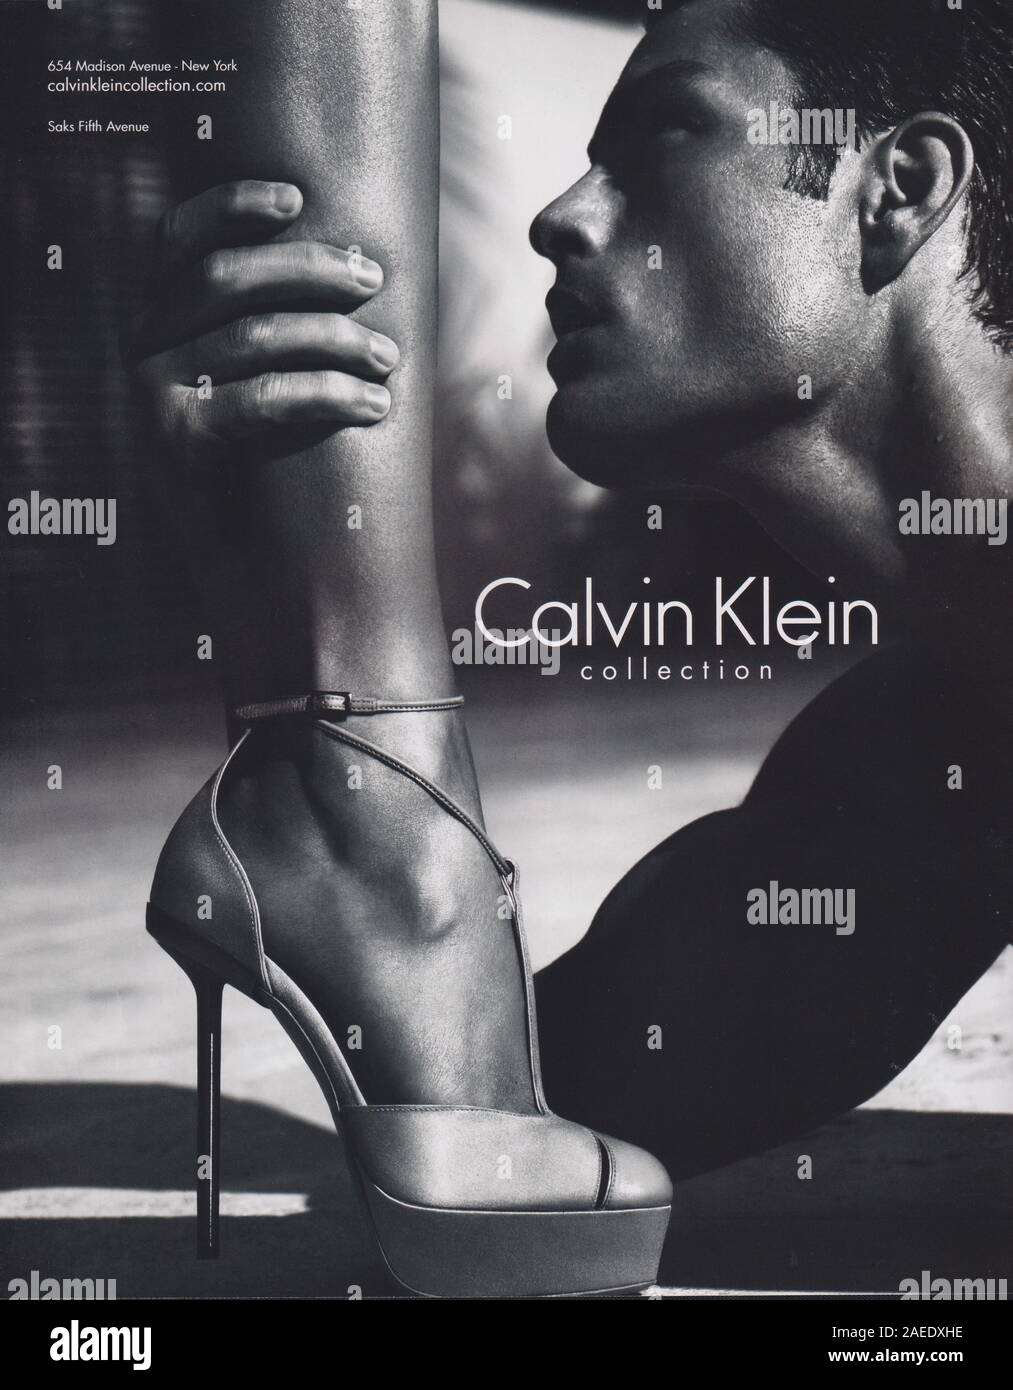 Cartel de publicidad Calvin Klein casa de moda con Lara Stone, Tyson Ballou  en la revista de papel de 2012, publicidad, publicidad creativa CK 2010s  anuncio Fotografía de stock - Alamy